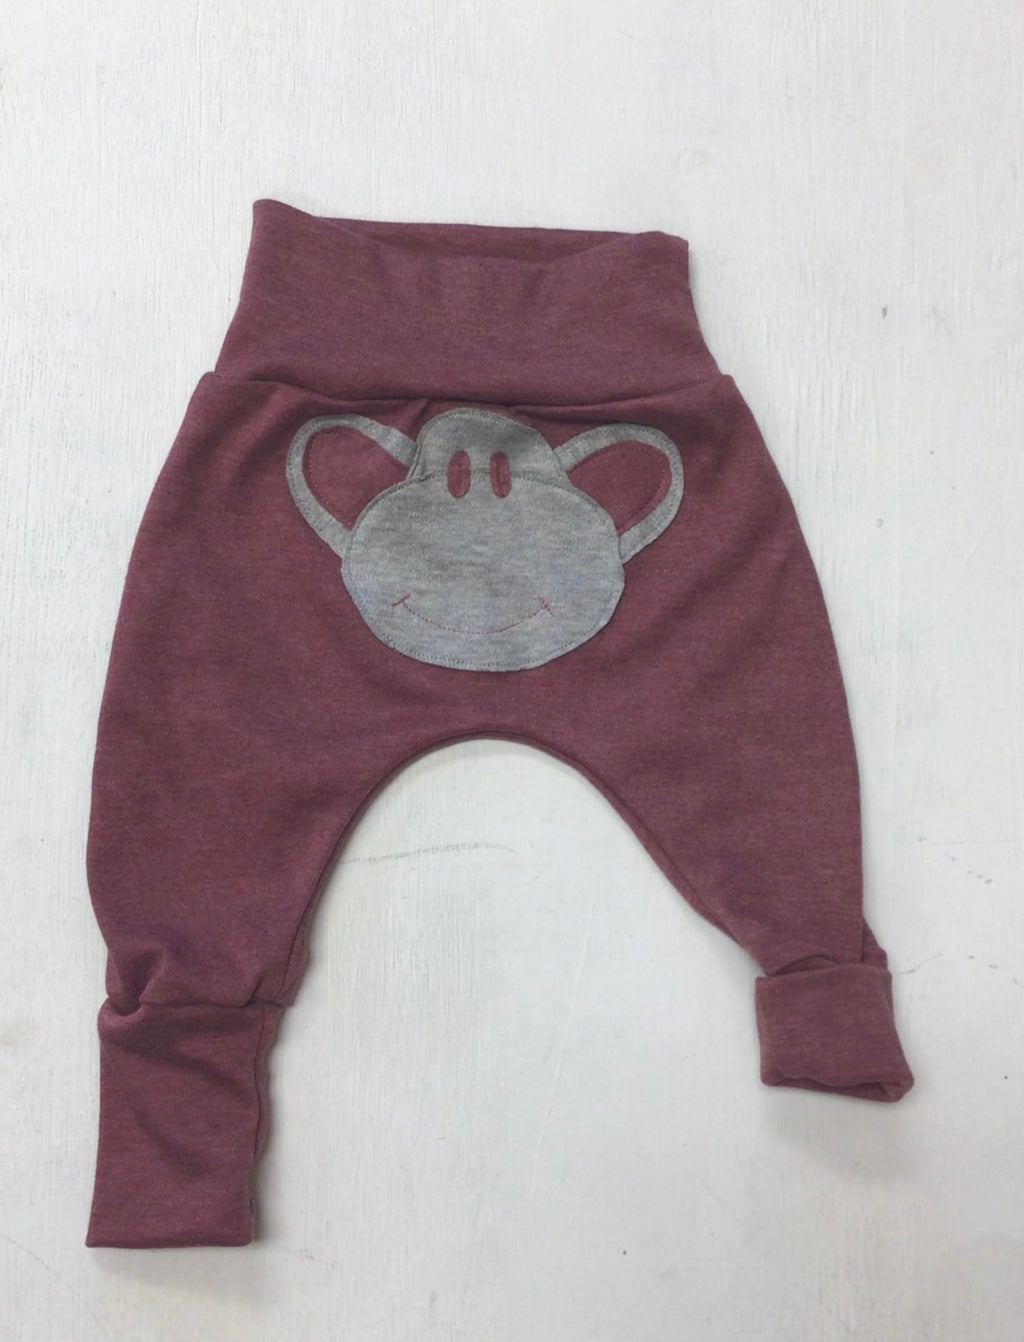 Monkey pants, grow pants, baby pants, handmade